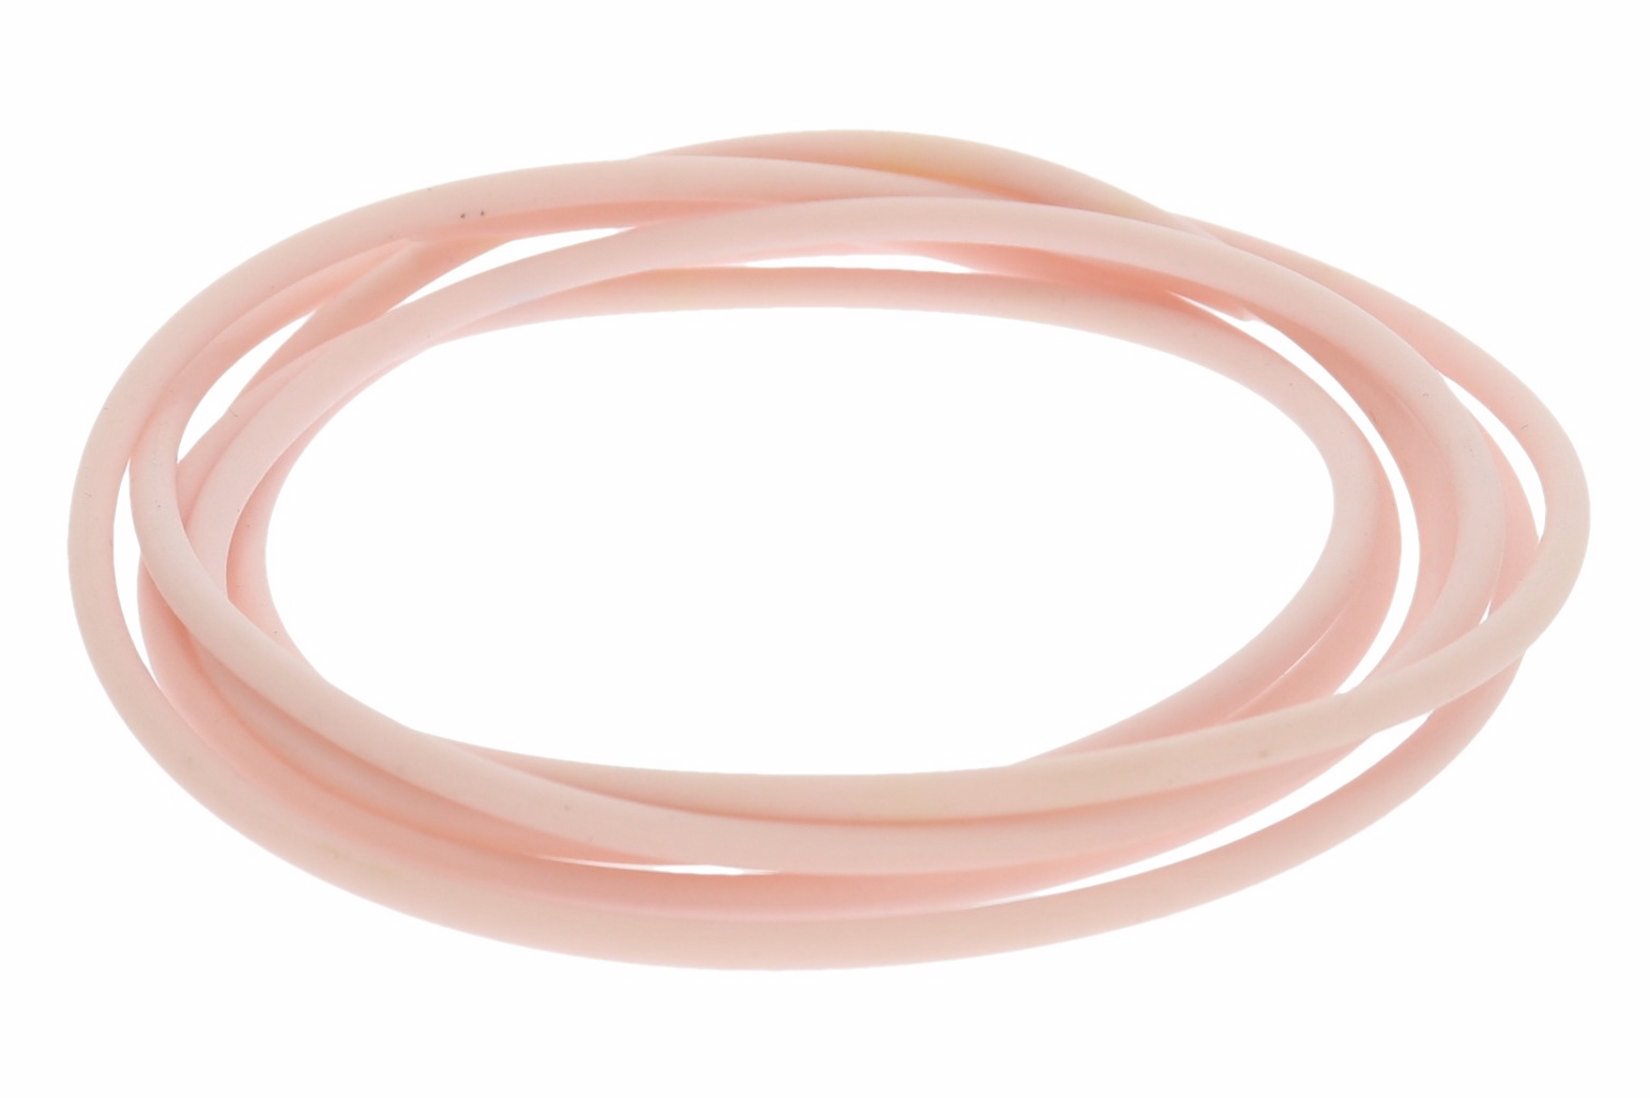 Kautschukband 2.0mm Ø 100cm rosa - Kautschuk Halsband